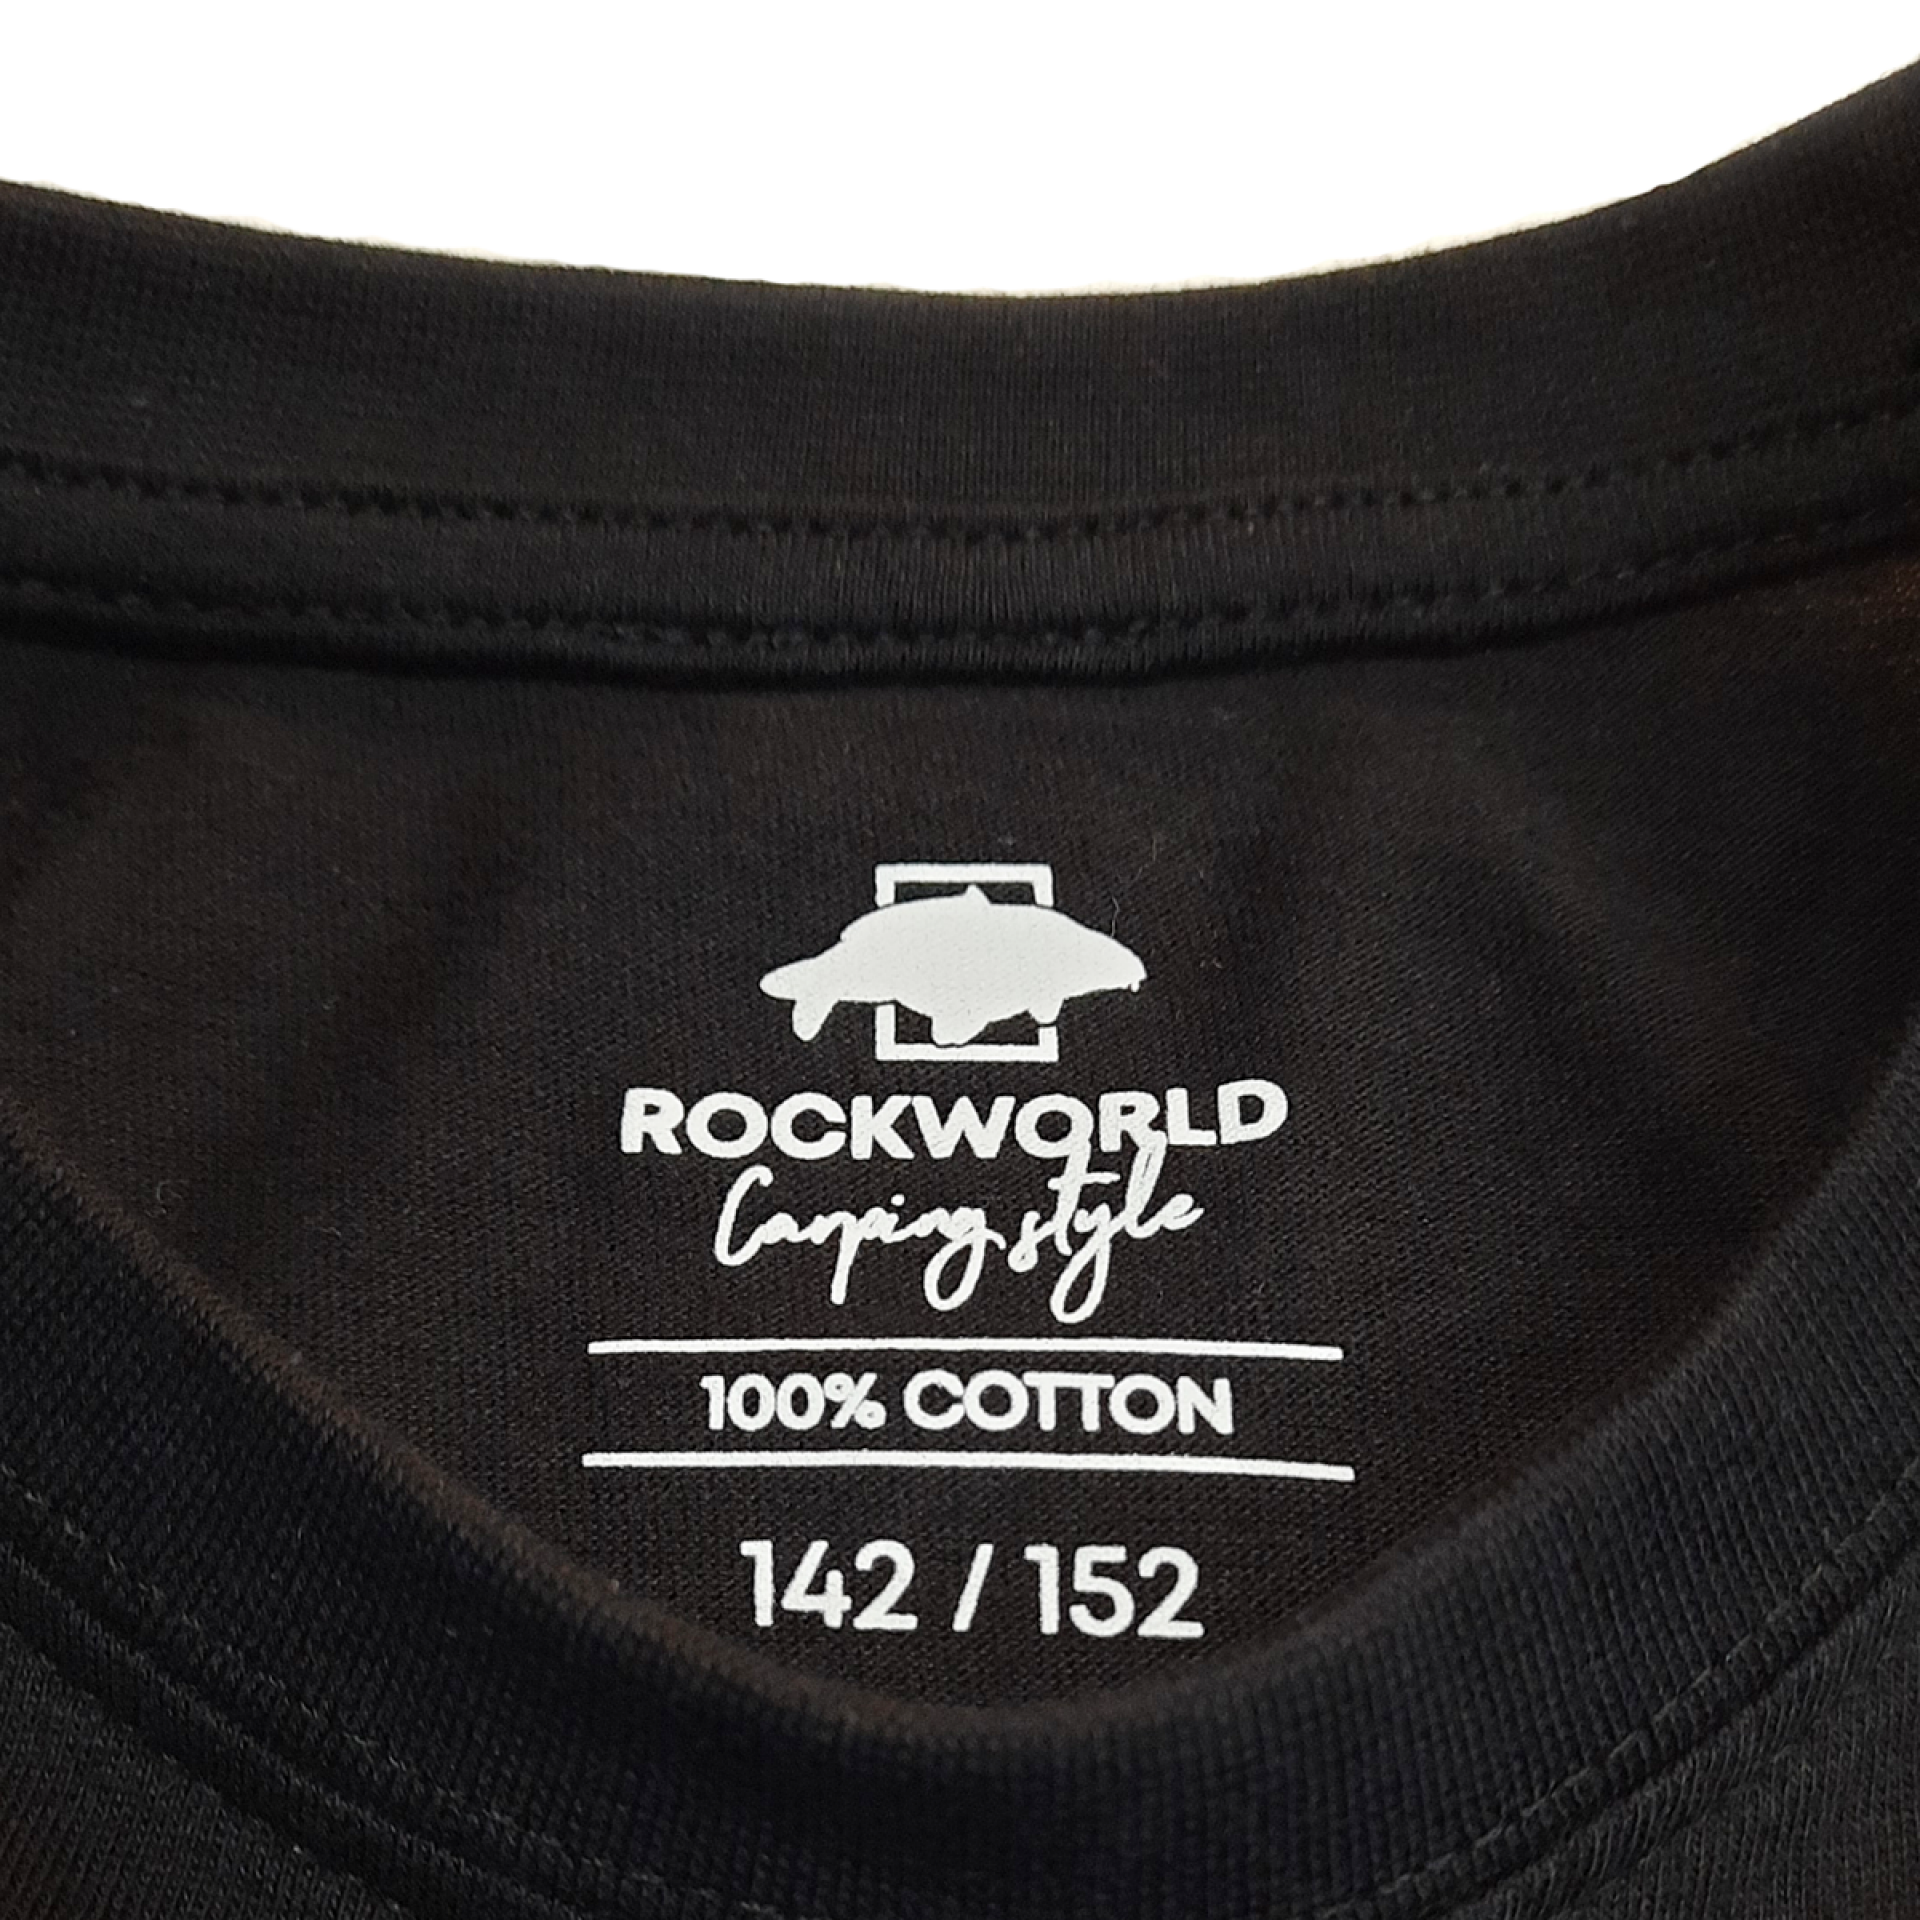 Rockworld Carping Style - Koszulka dziecięca czarna